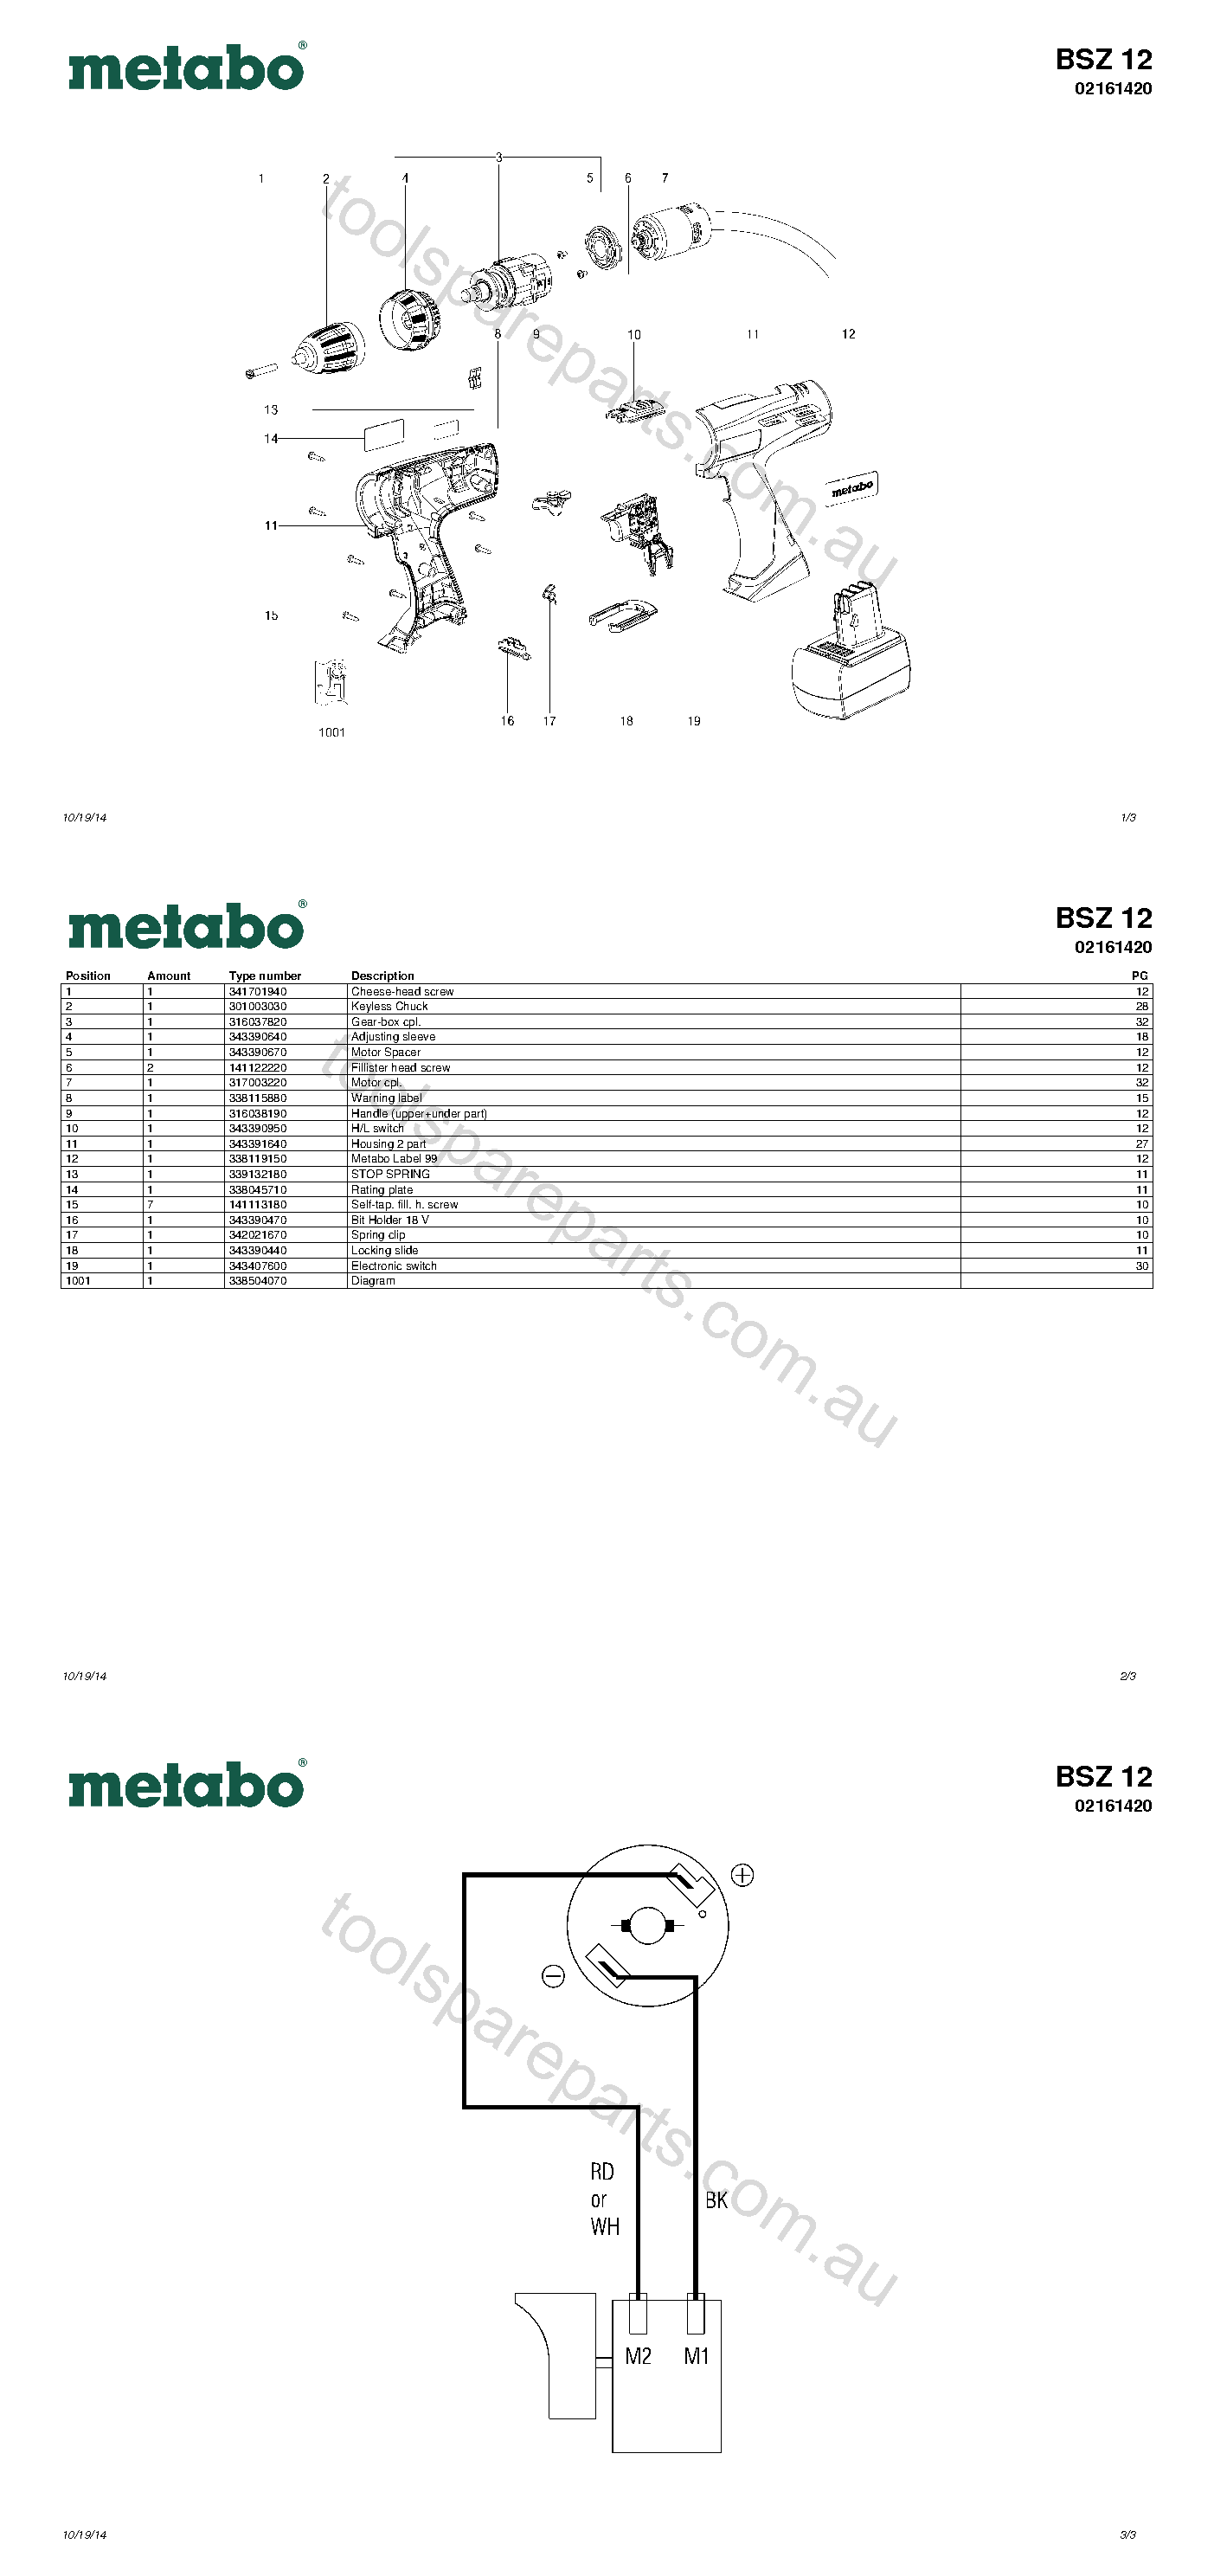 Metabo BSZ 12 02161420  Diagram 1